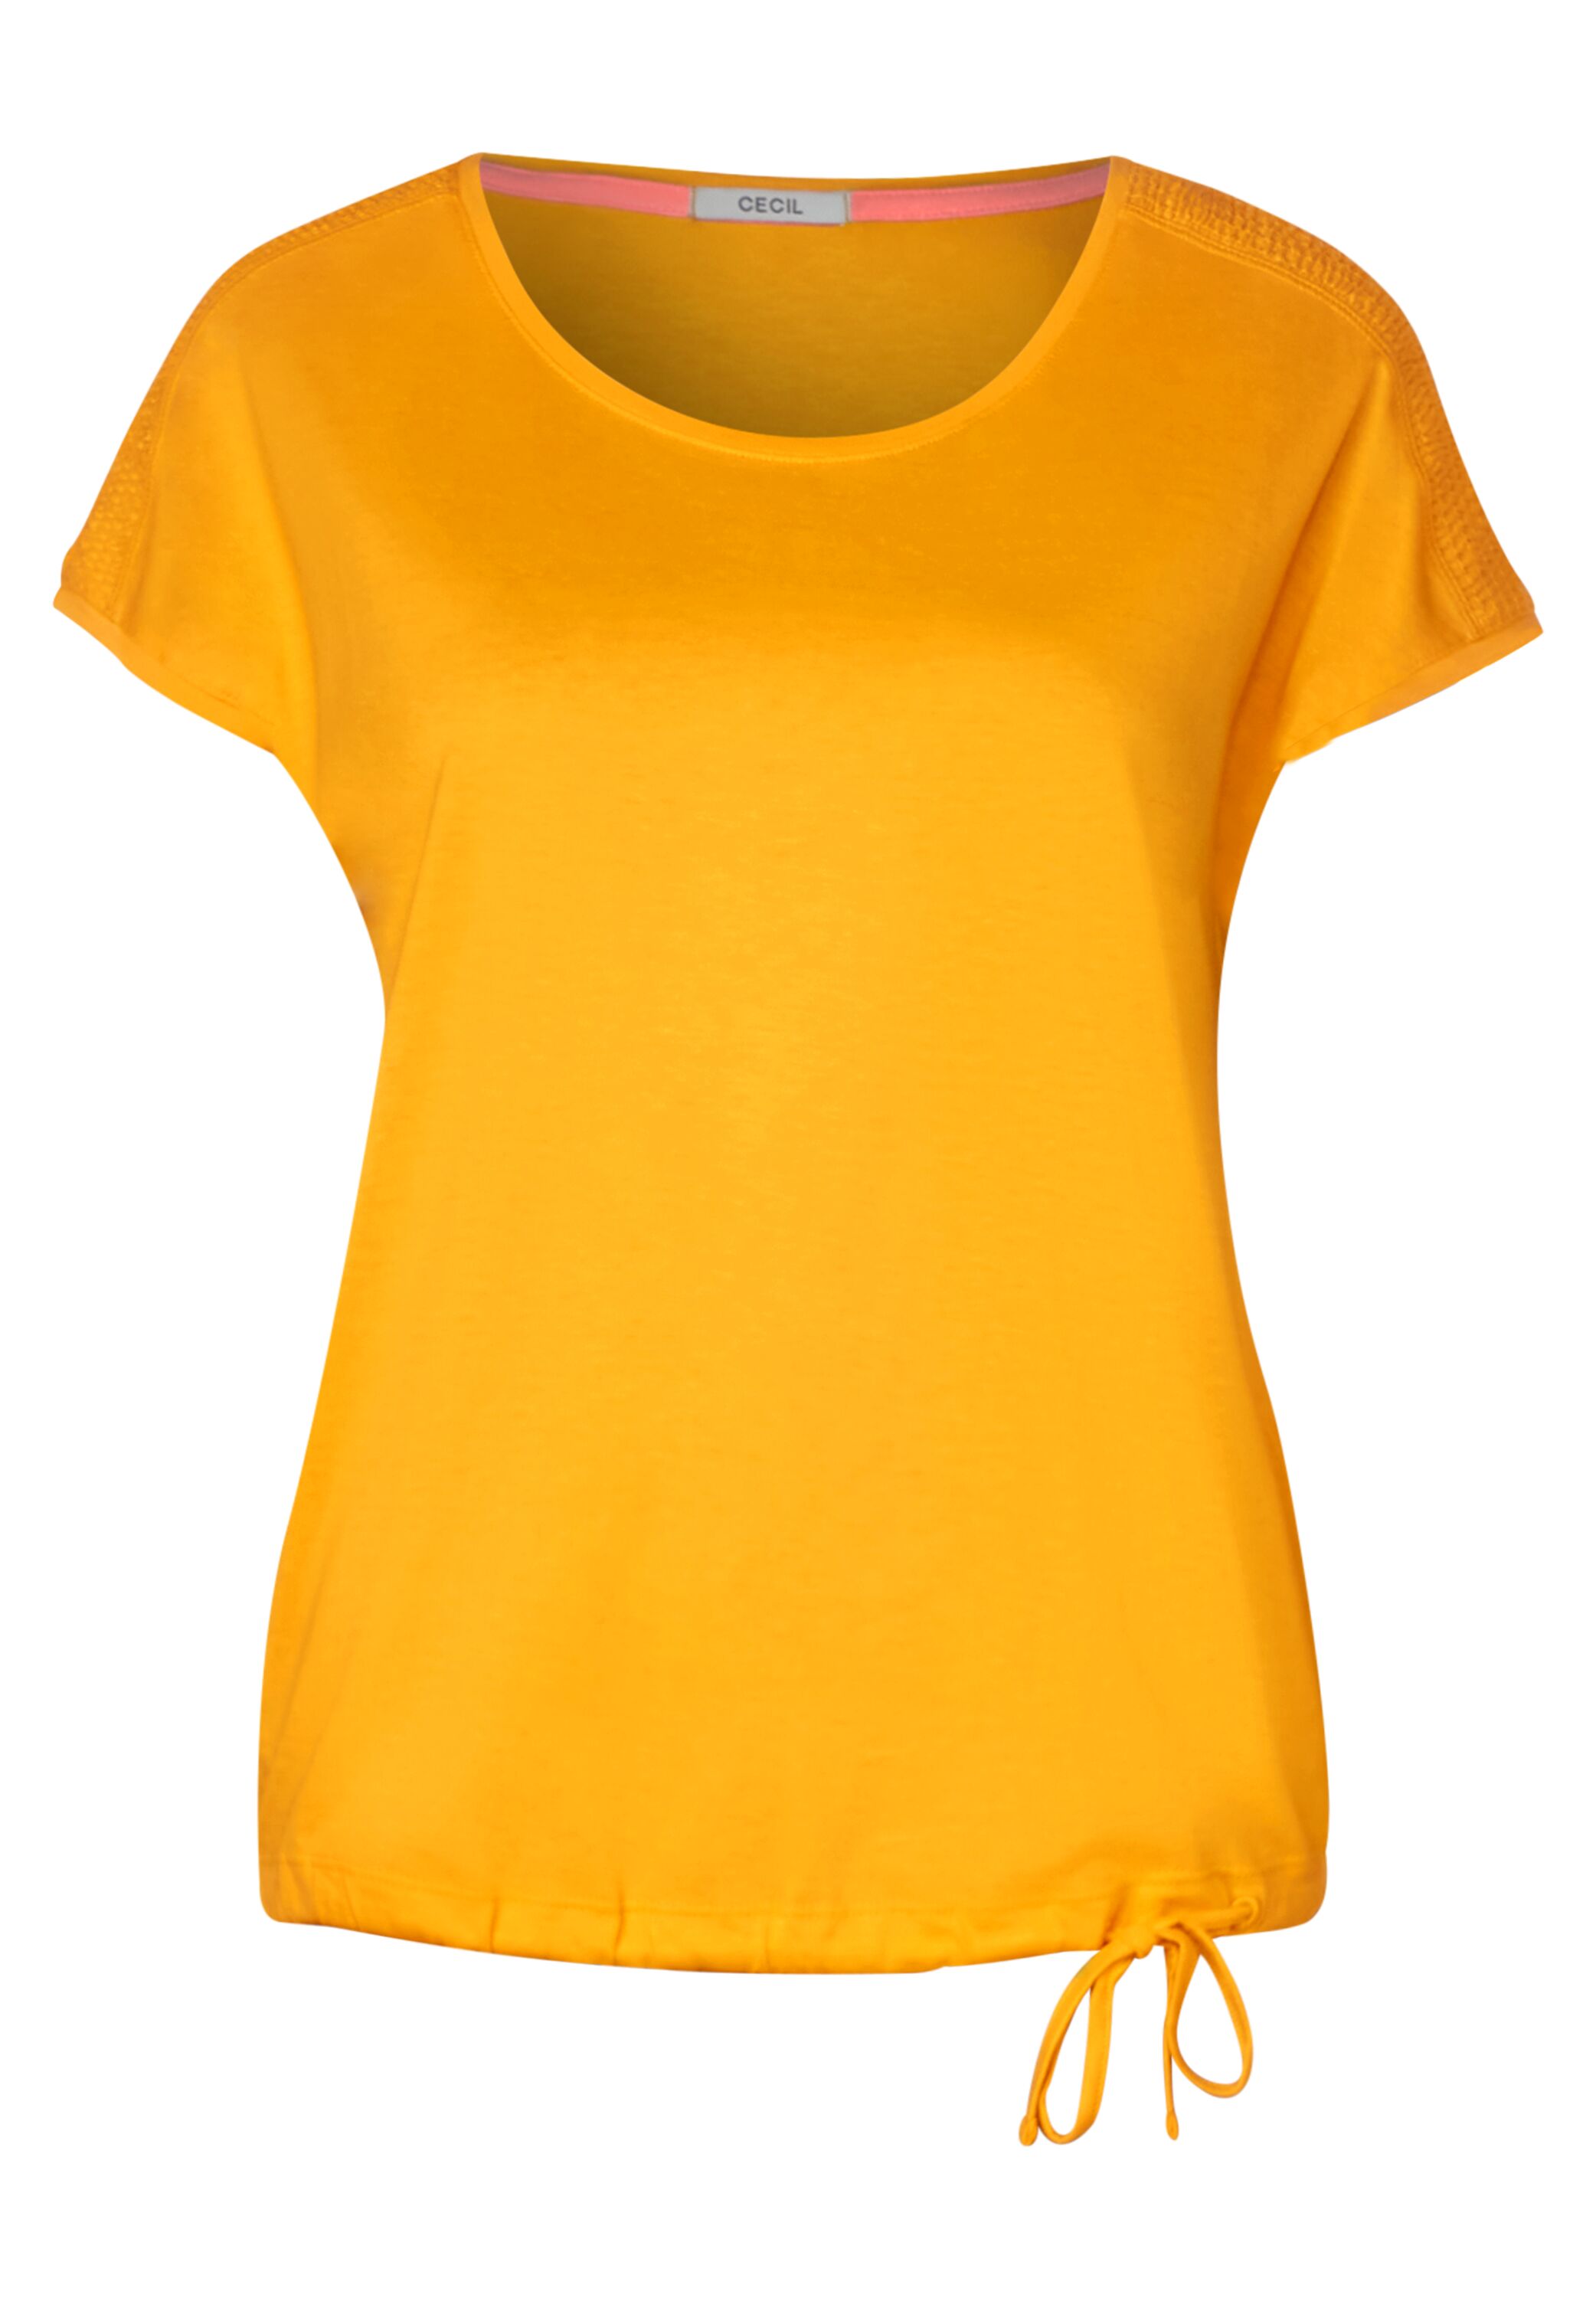 Mode T-Shirt Yellow im SALE reduziert B314828-12050 CONCEPT - Mango in CECIL